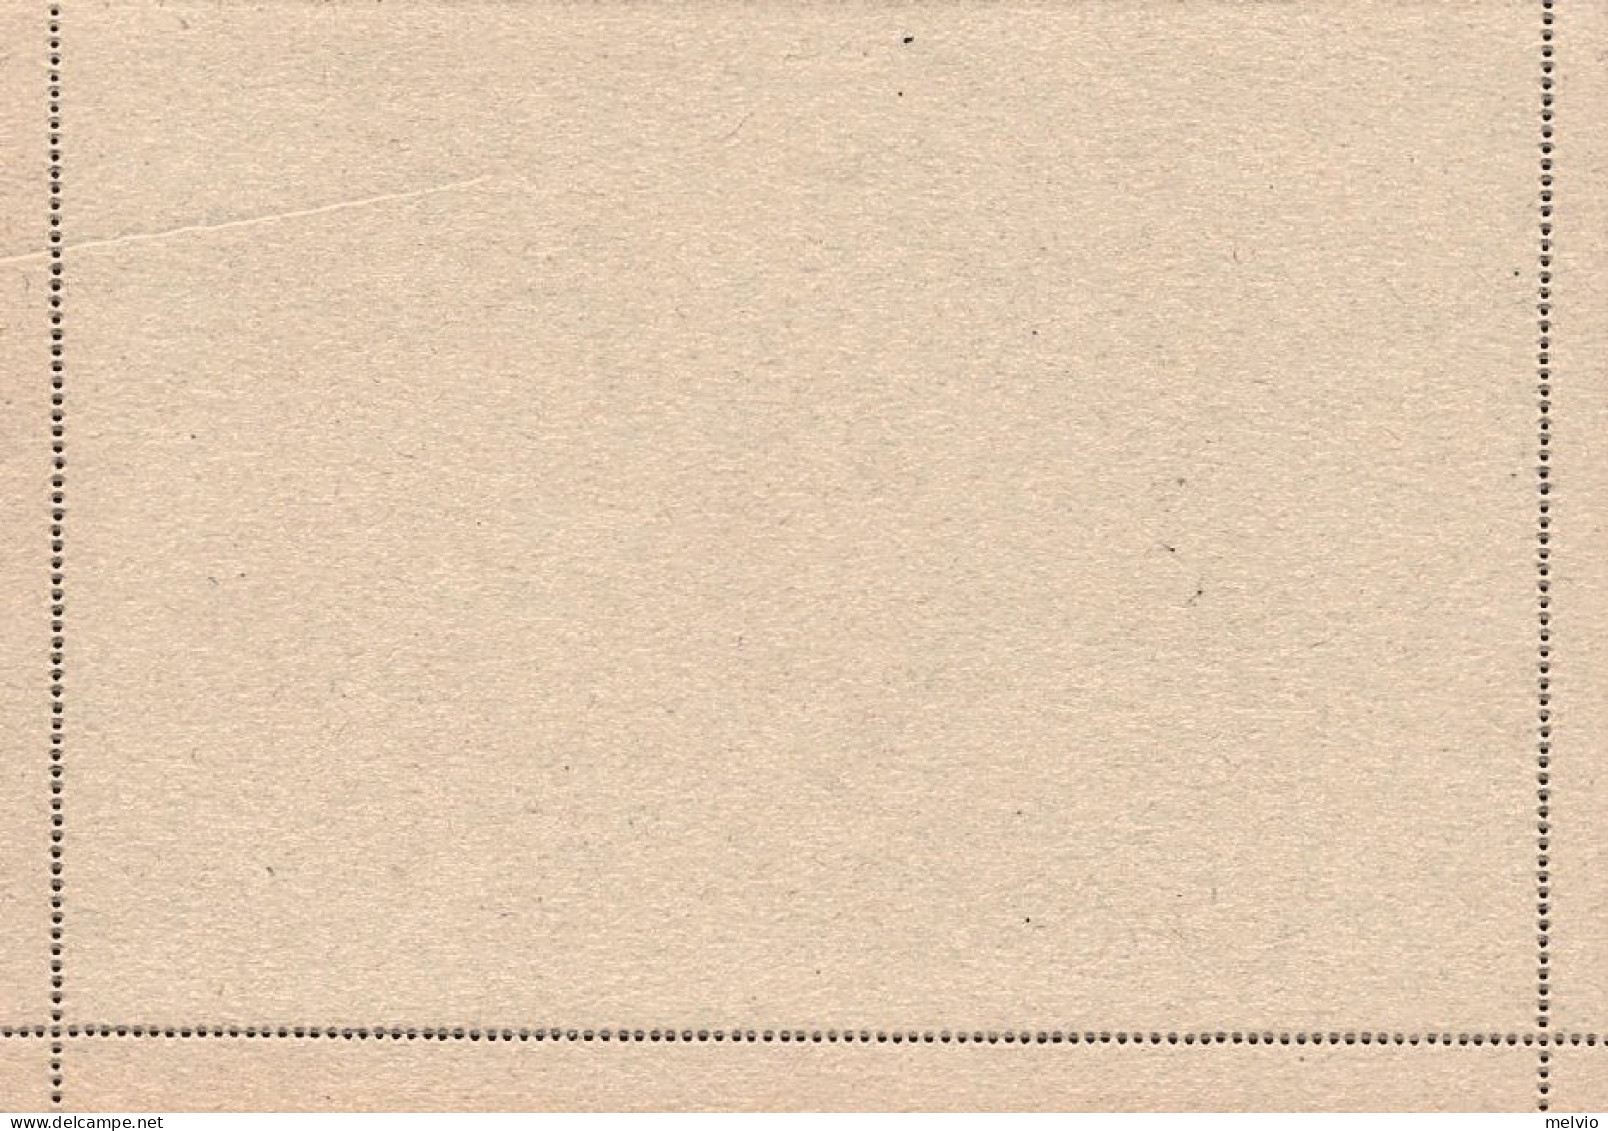 1944-RSI Biglietto Postale 25c. Monumenti Distrutti Nuovo - Postwaardestukken